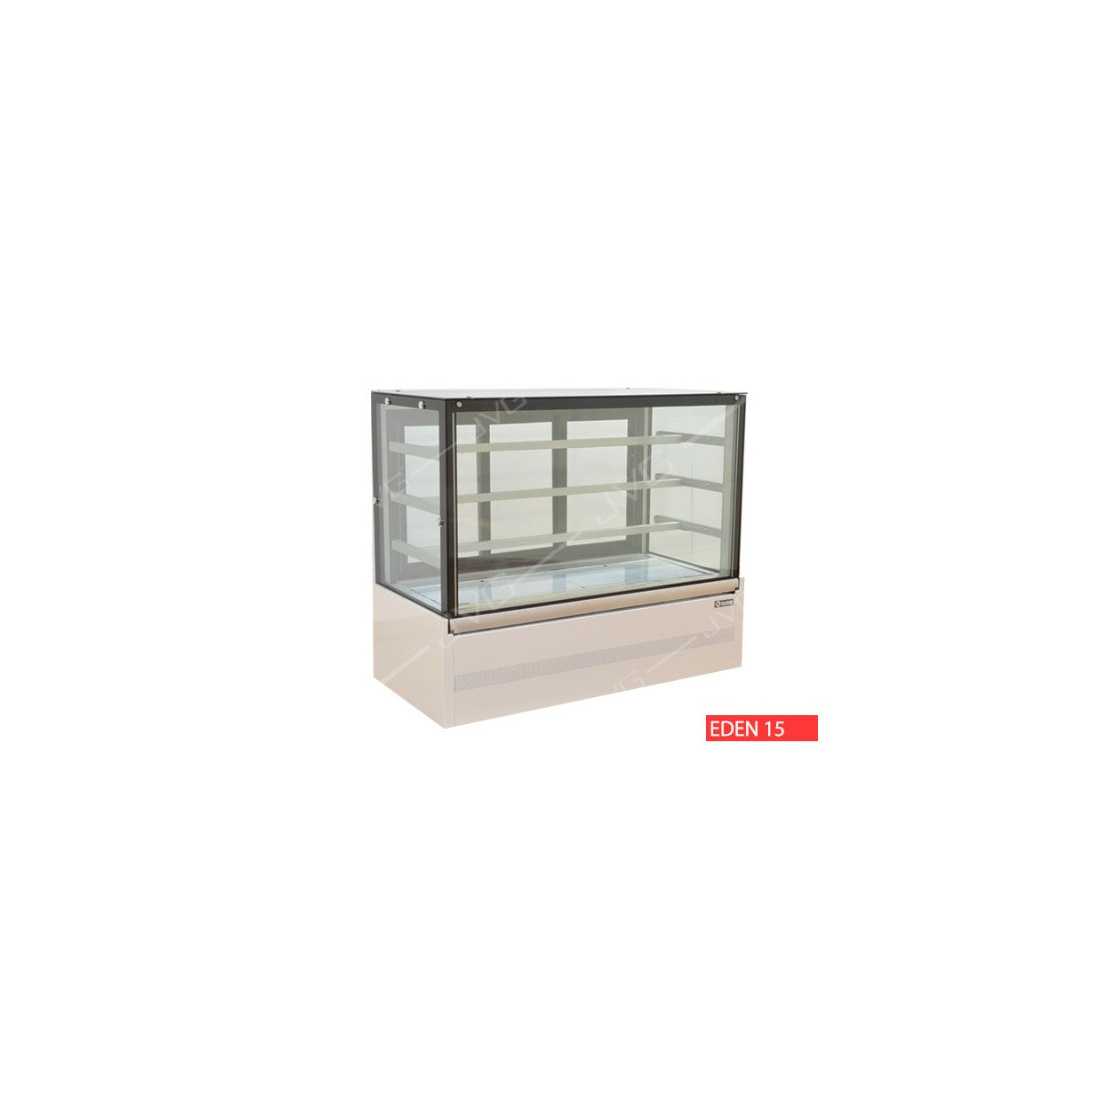 Easy Best ,EDEN15, Bakery Display Cabinet|mkayn|مكاين